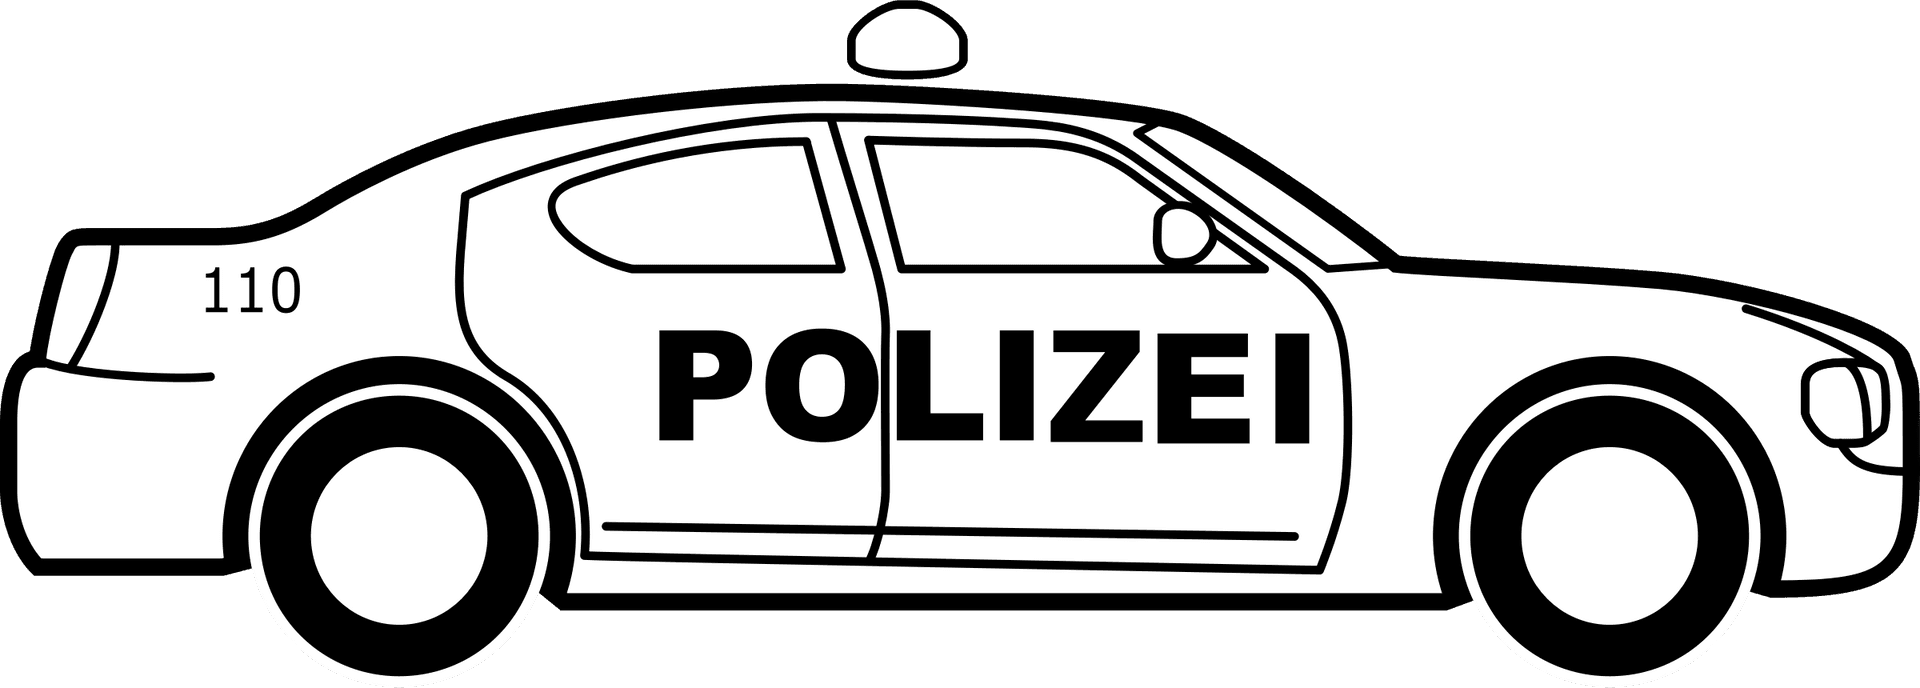 German Polizei Police Car Vector PNG image